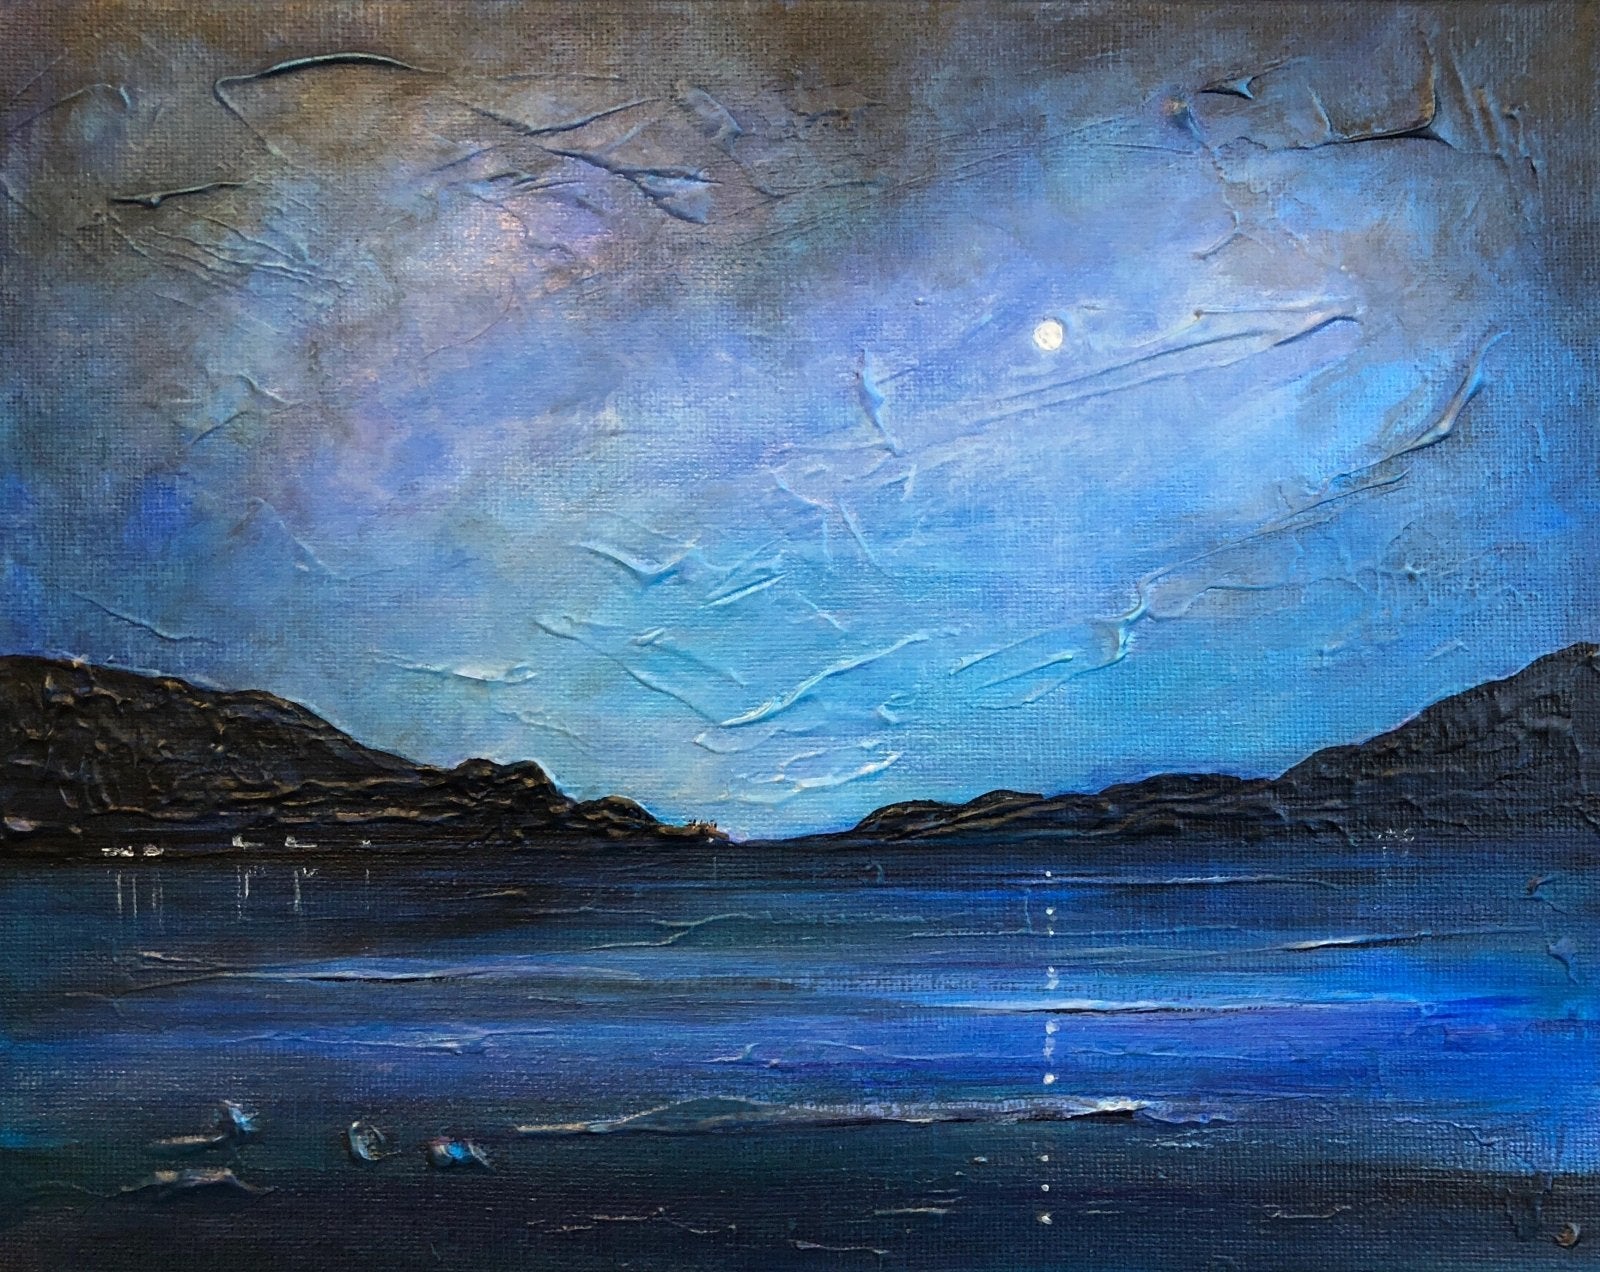 Loch Ness Moonlight-Signed Art Prints By Scottish Artist Hunter-Scottish Lochs & Mountains Art Gallery-Paintings, Prints, Homeware, Art Gifts From Scotland By Scottish Artist Kevin Hunter